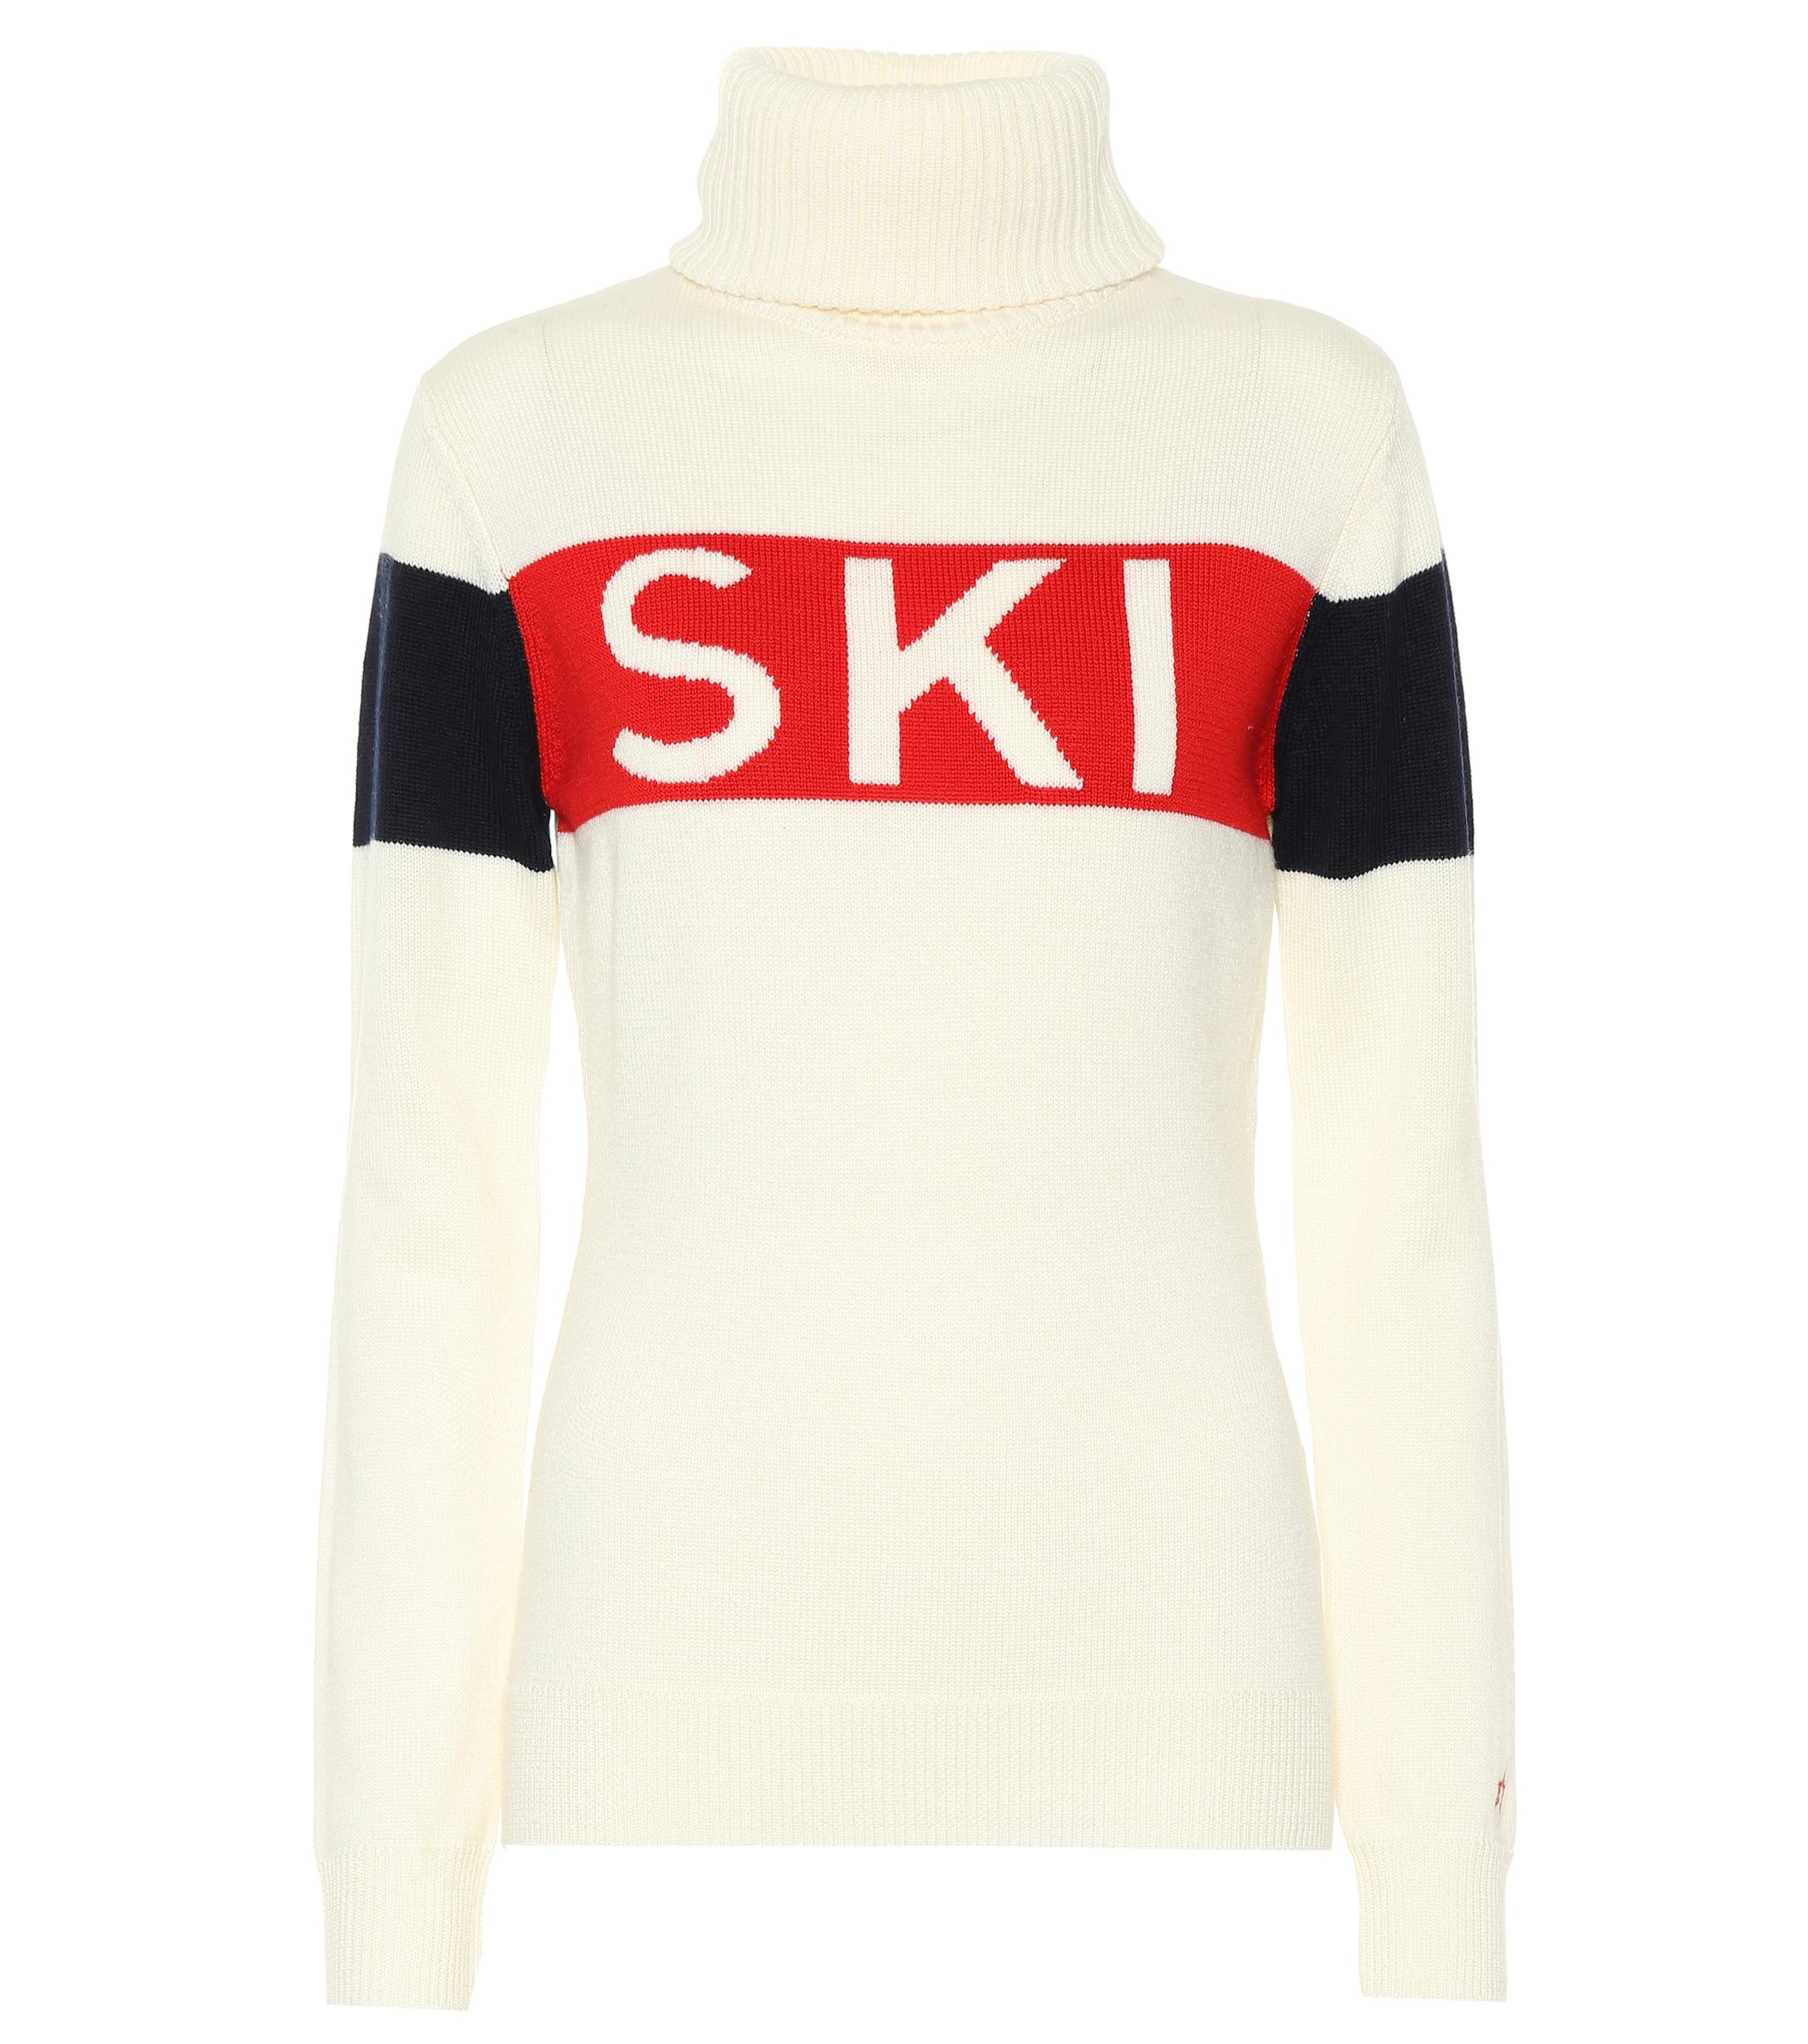 Lyst - Perfect Moment Ski Merino Wool Sweater in White